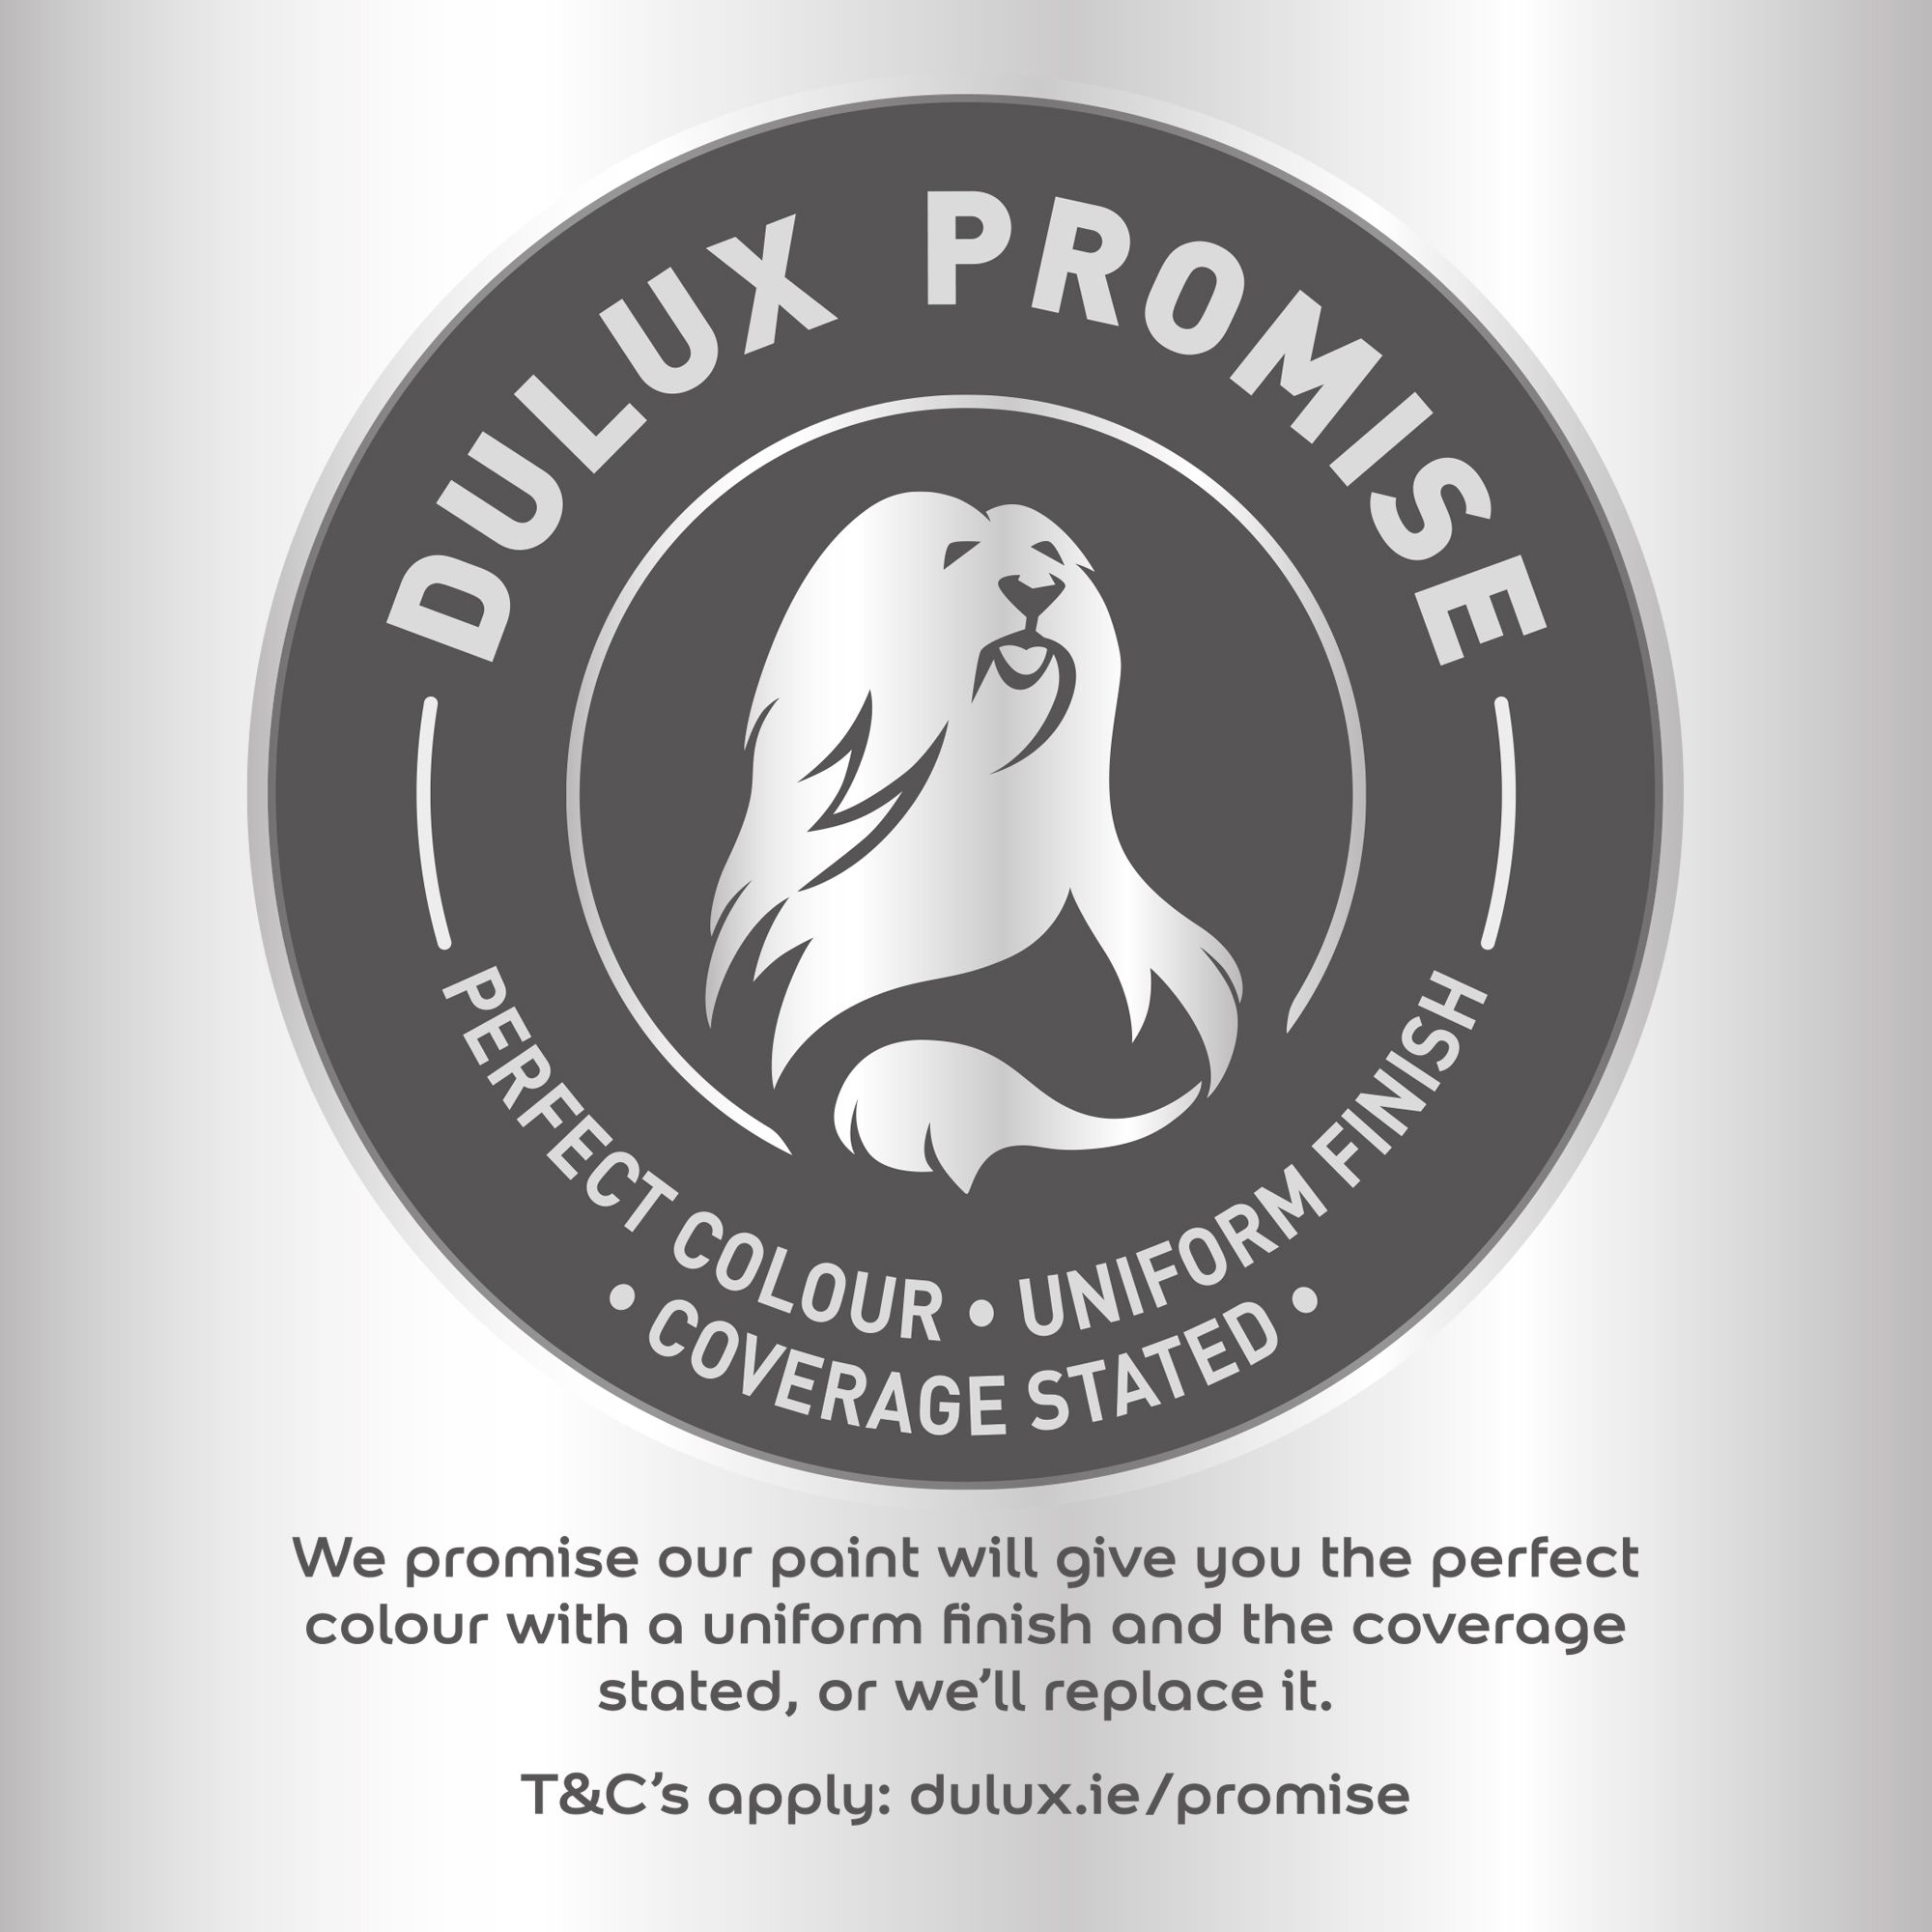 Dulux Easycare Warm cream Vinyl matt Emulsion paint, 2.5L